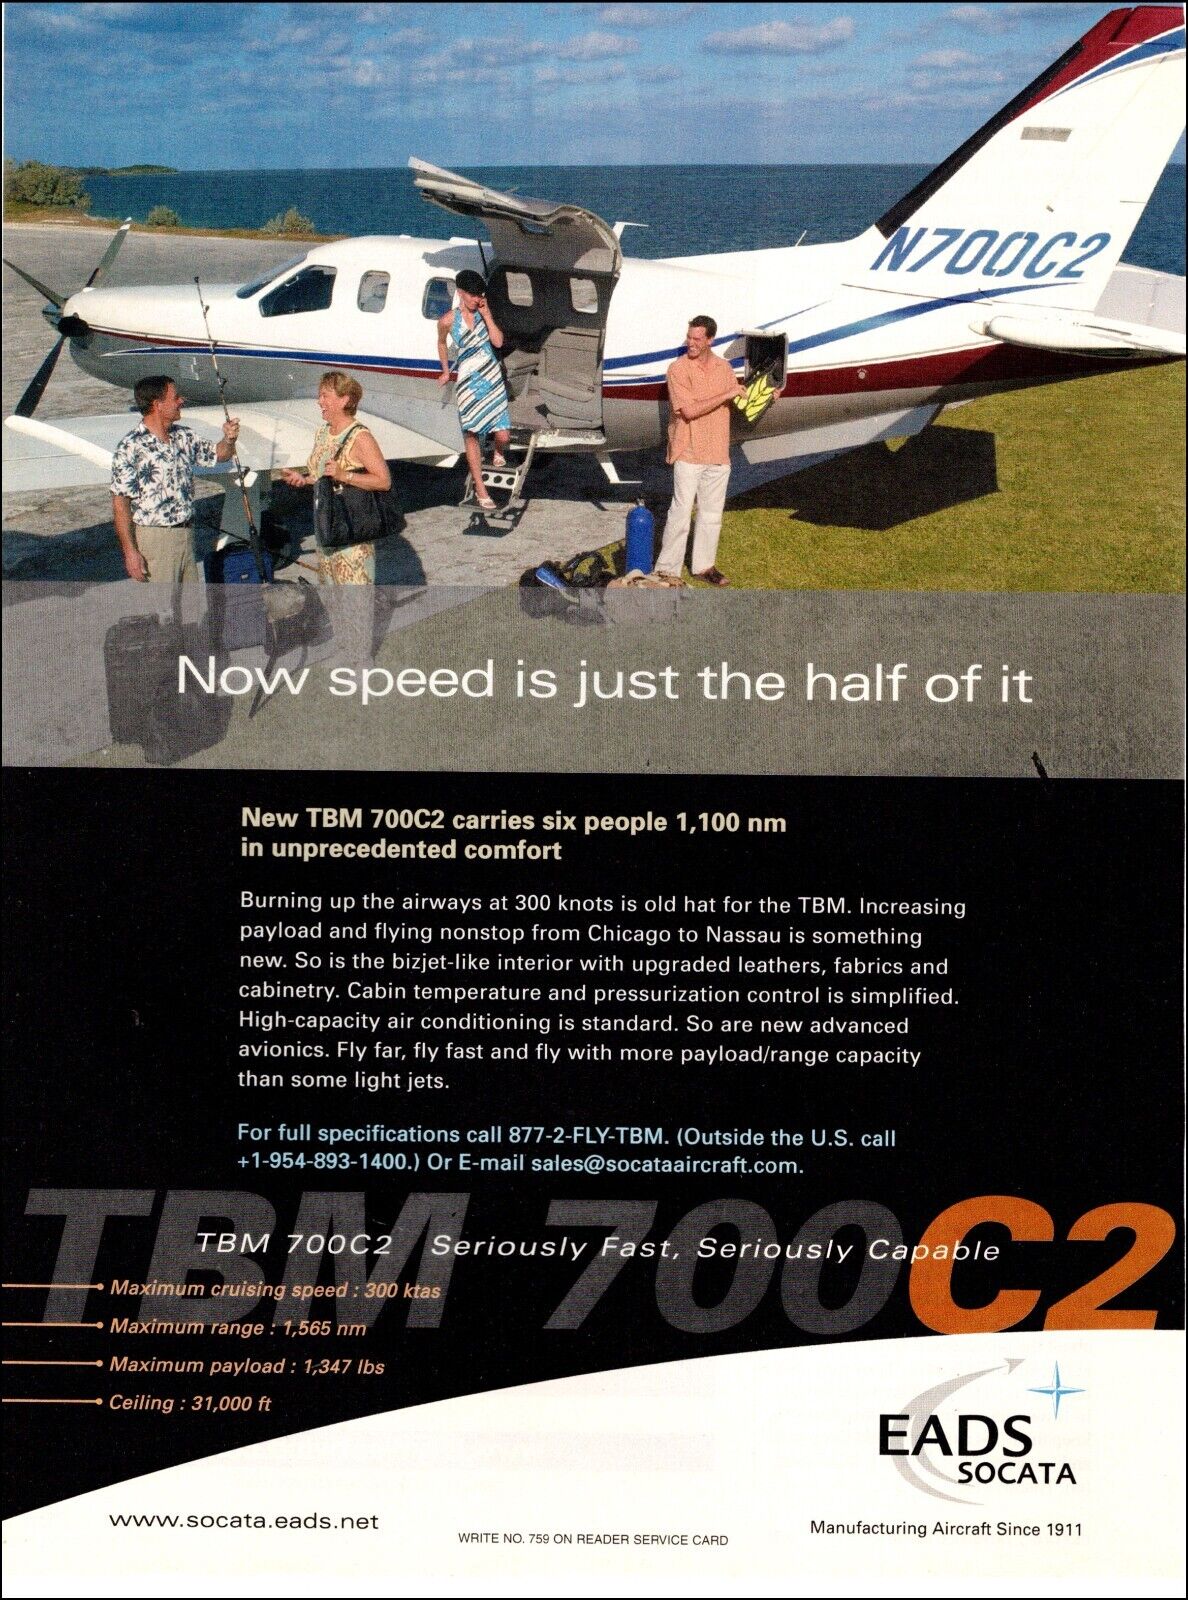 2004 magazinr aircraft AD TBM 700C2 6 seat 1100 miles 300+mph Eads Socata 062922